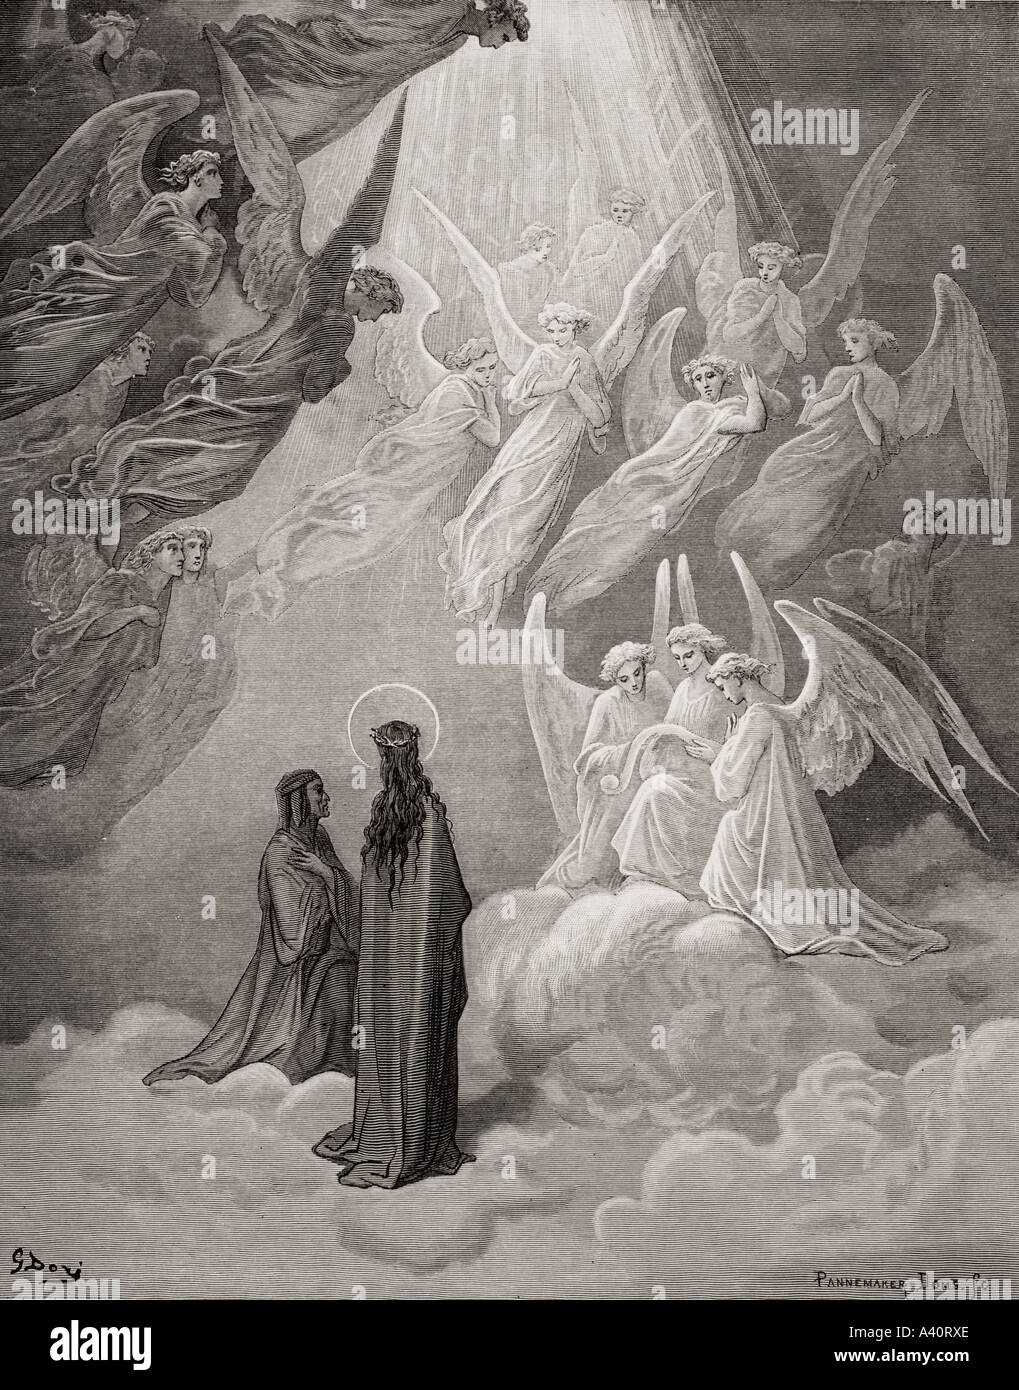 Ilustración del Paraíso de Dante Alighieri, Canto XX, líneas 10 a 12, por Gustave Doré, 1832 - 1883. Artista e Ilustrador francés. Foto de stock